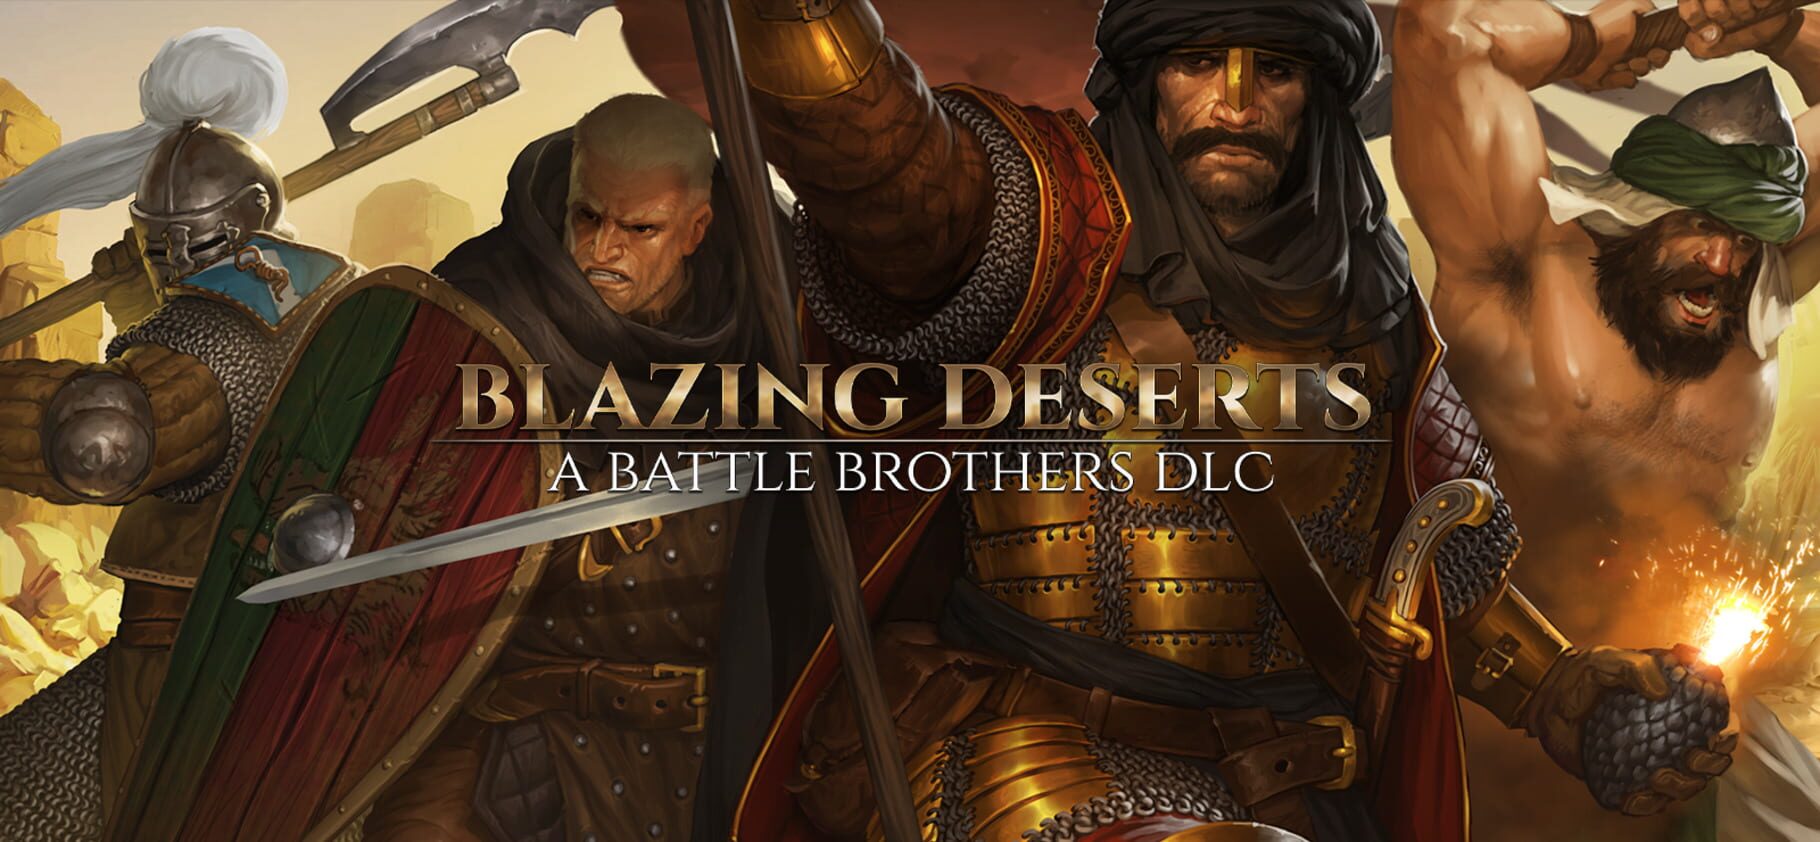 Battle Brothers: Blazing Deserts artwork